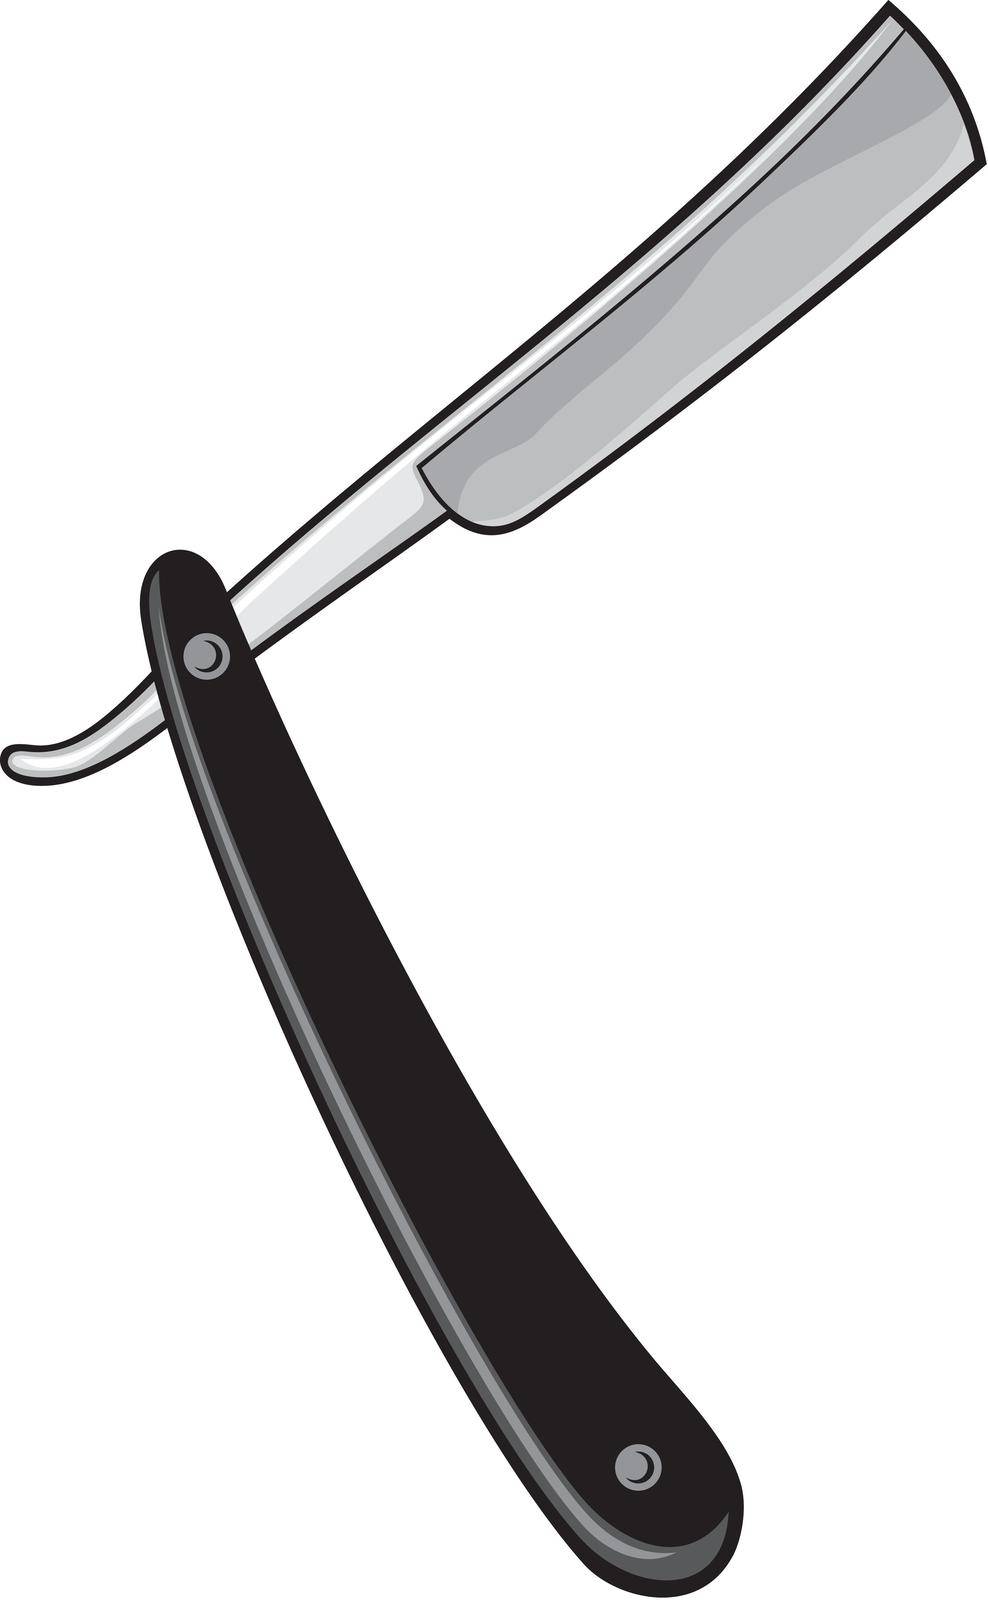 Shaving (barber) razor knife by TribaliumArt